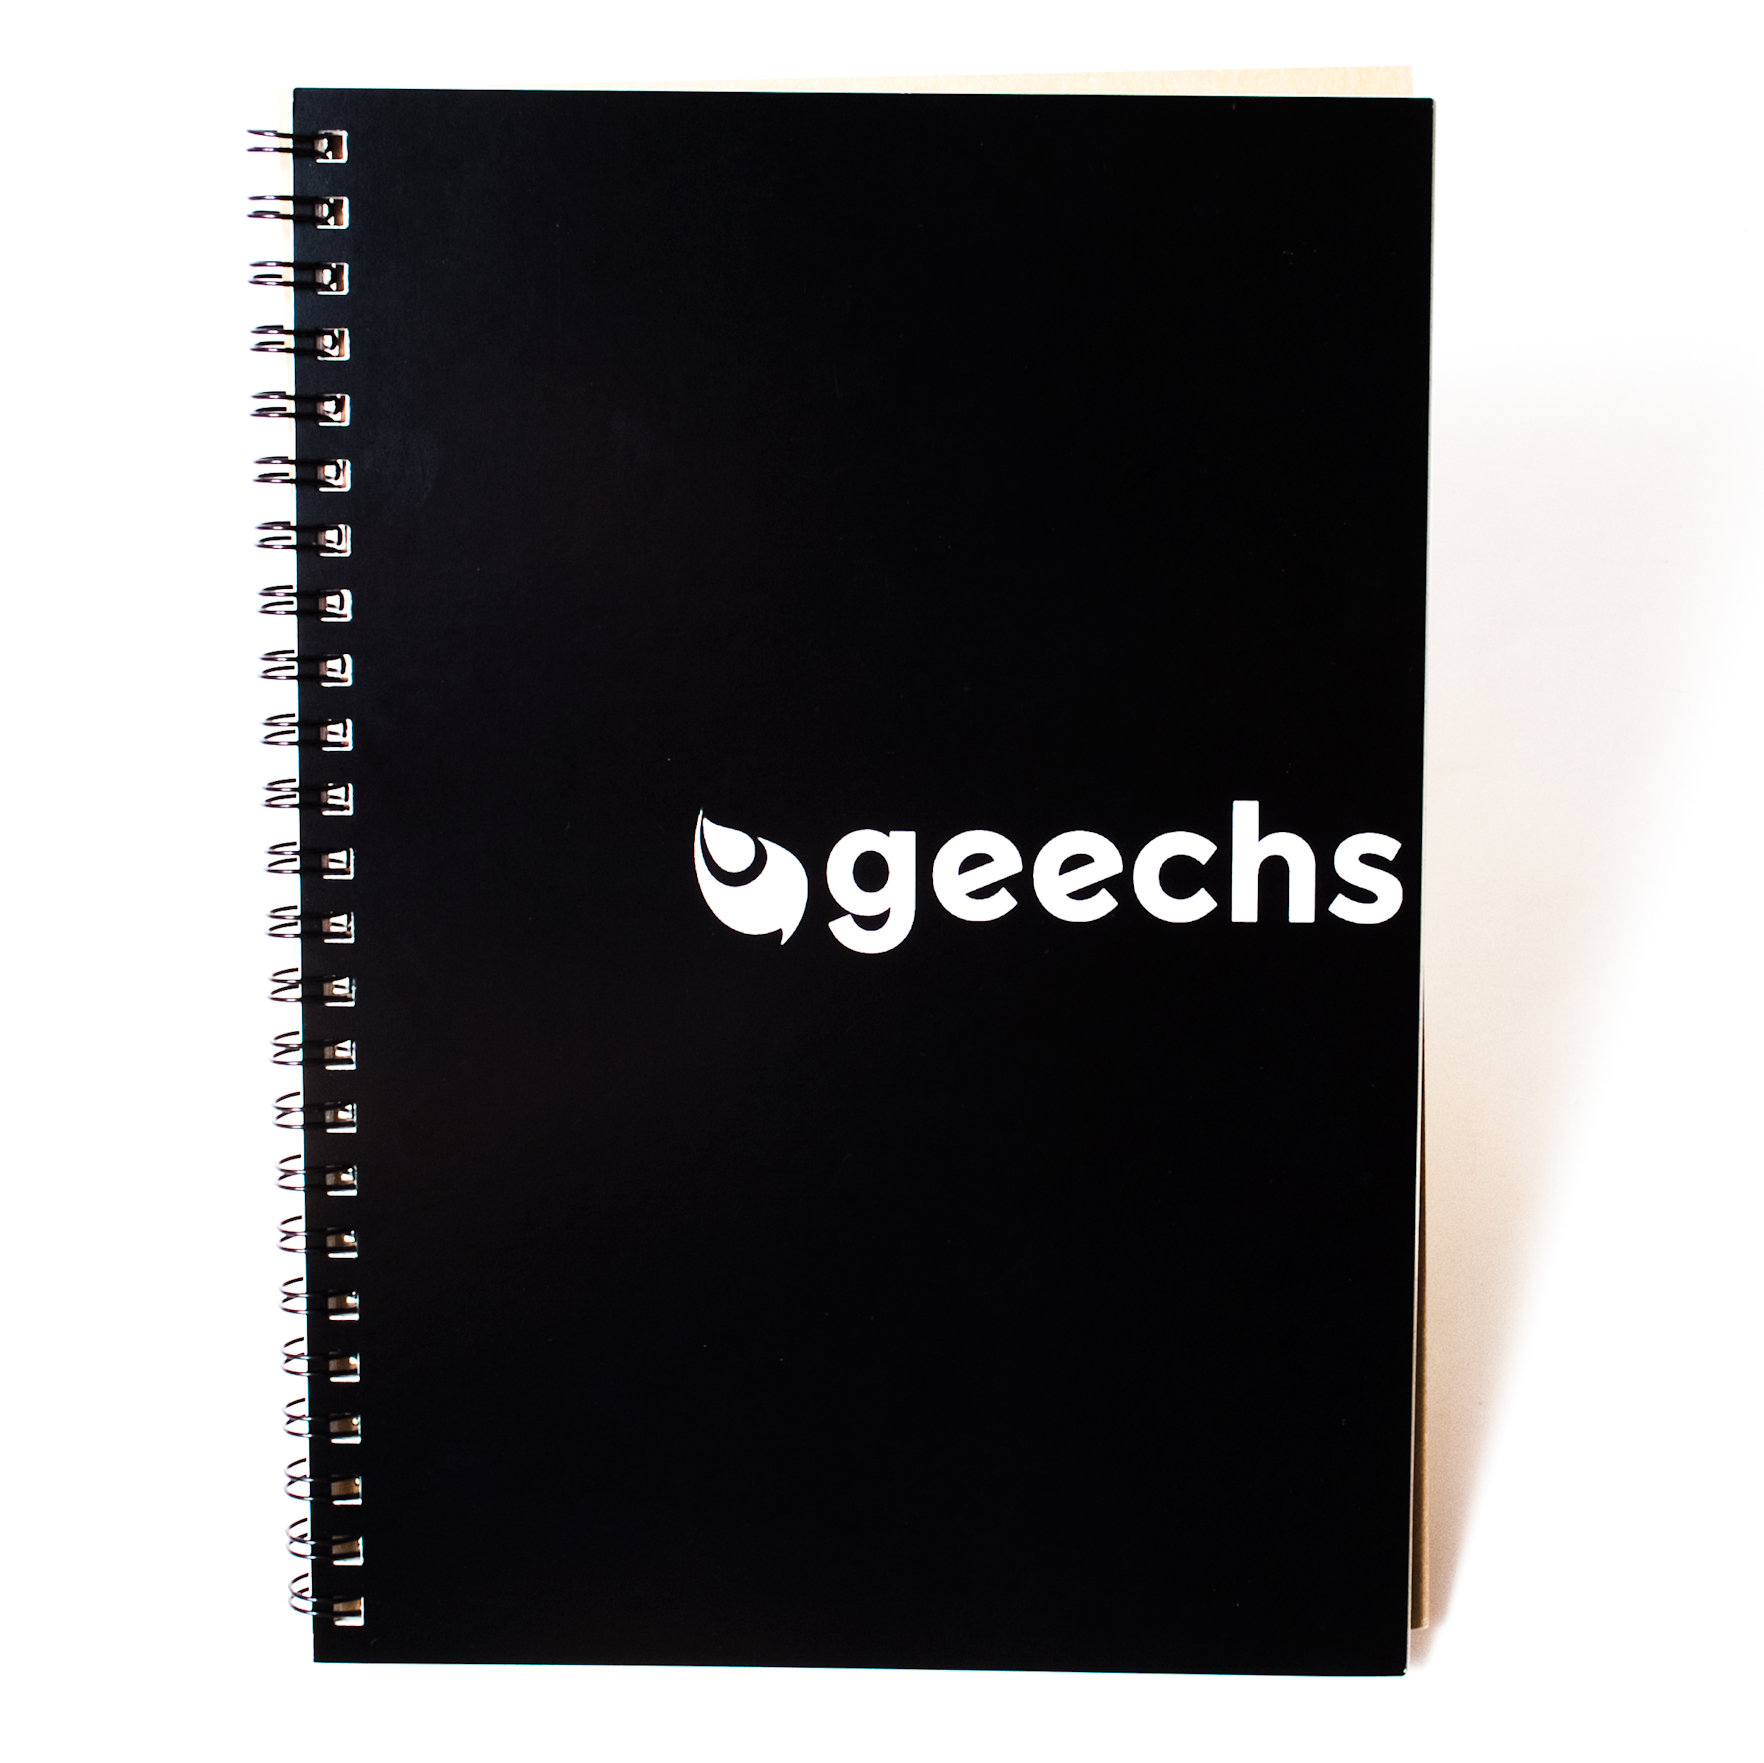 「geechs株式会社 様」製作のオリジナルノート